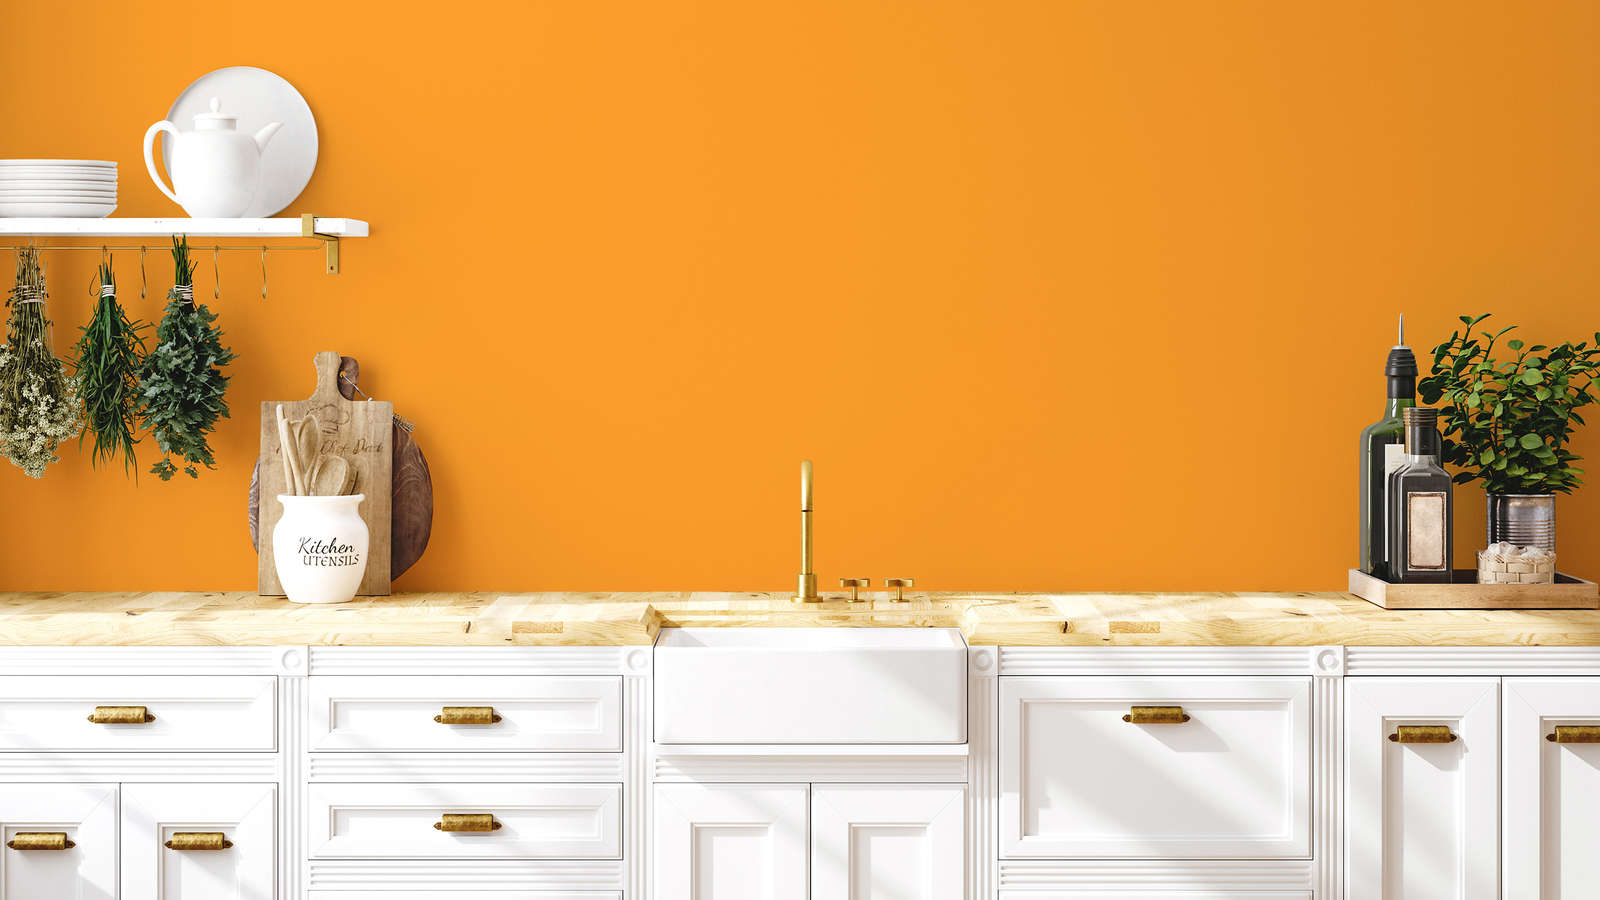             Pittura murale Premium Giallo miele allegro »Juicy Yellow« NW807 – 1 litri
        